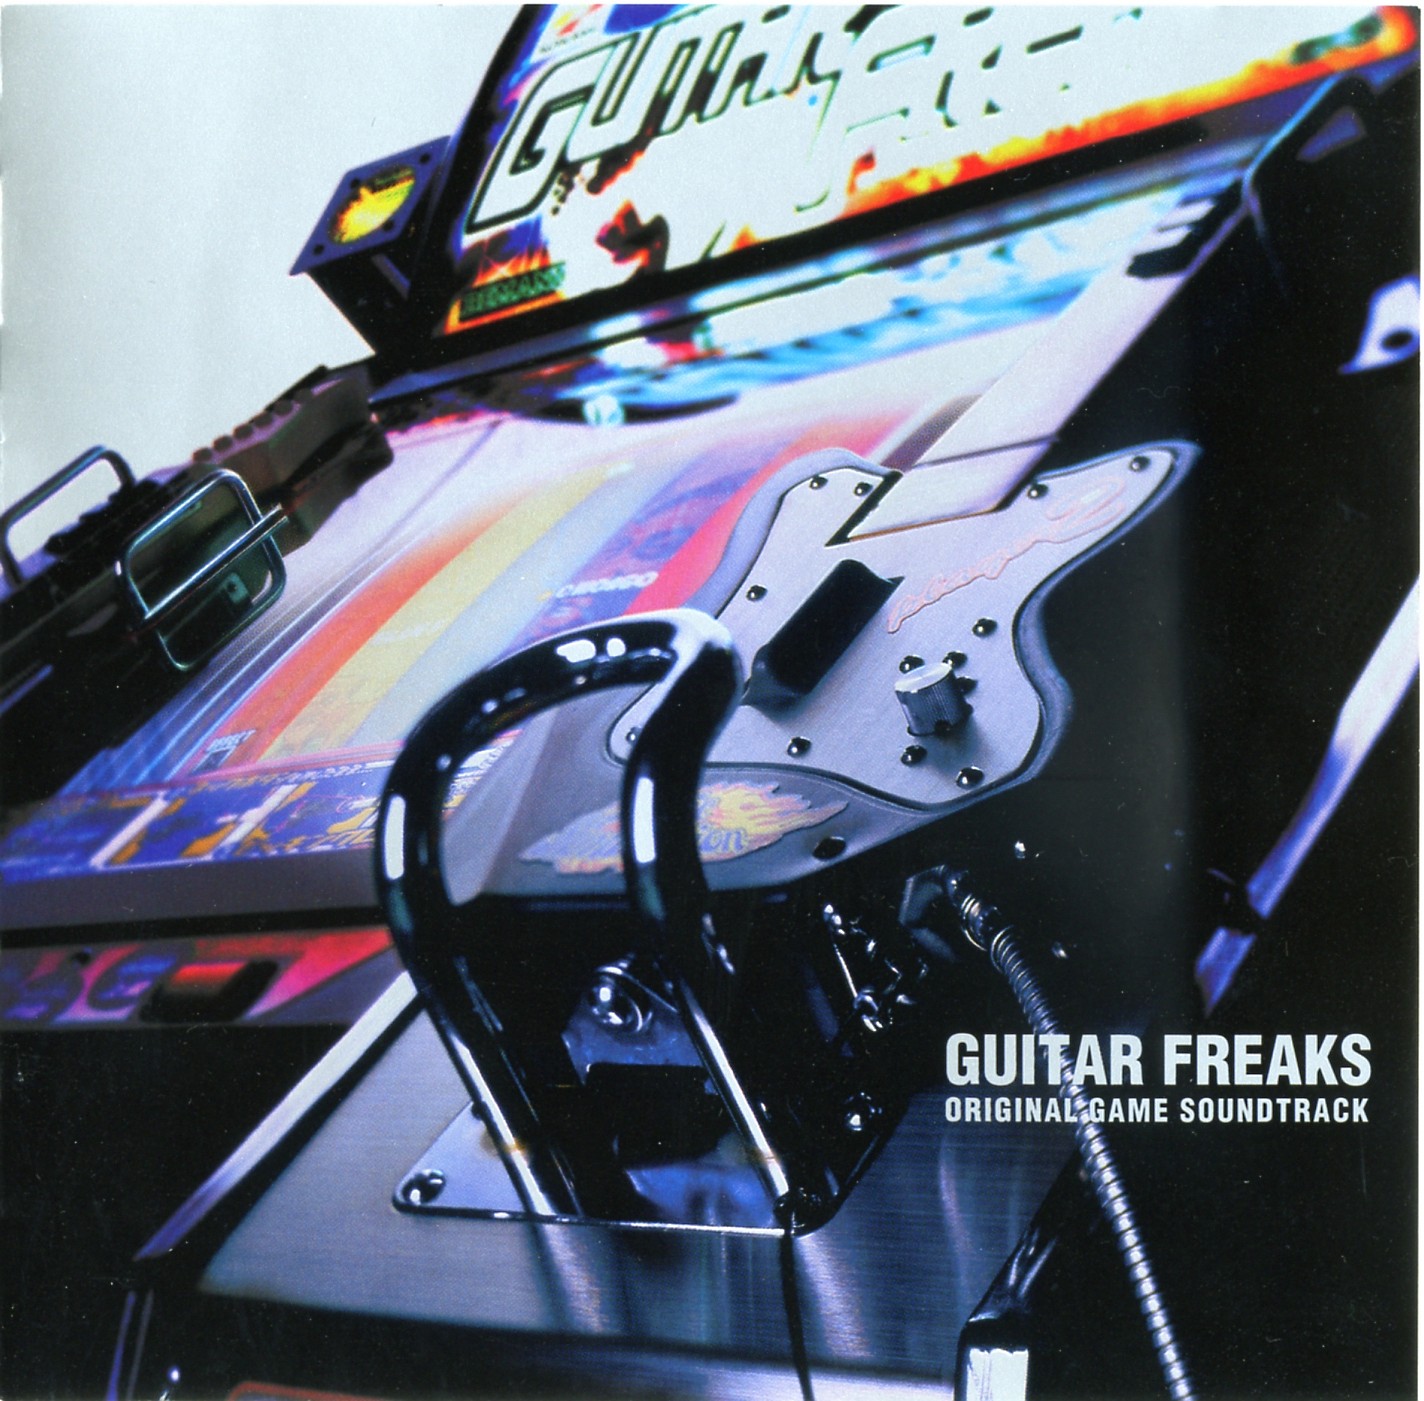 Guitar Freaks Original Game Soundtrack